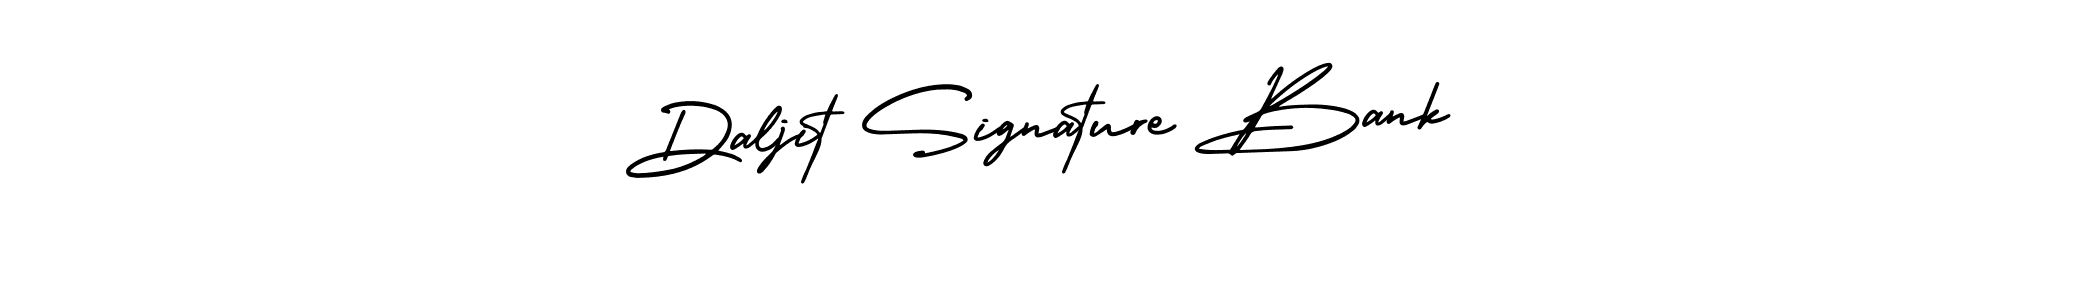 Best and Professional Signature Style for Daljit Signature Bank. AmerikaSignatureDemo-Regular Best Signature Style Collection. Daljit Signature Bank signature style 3 images and pictures png